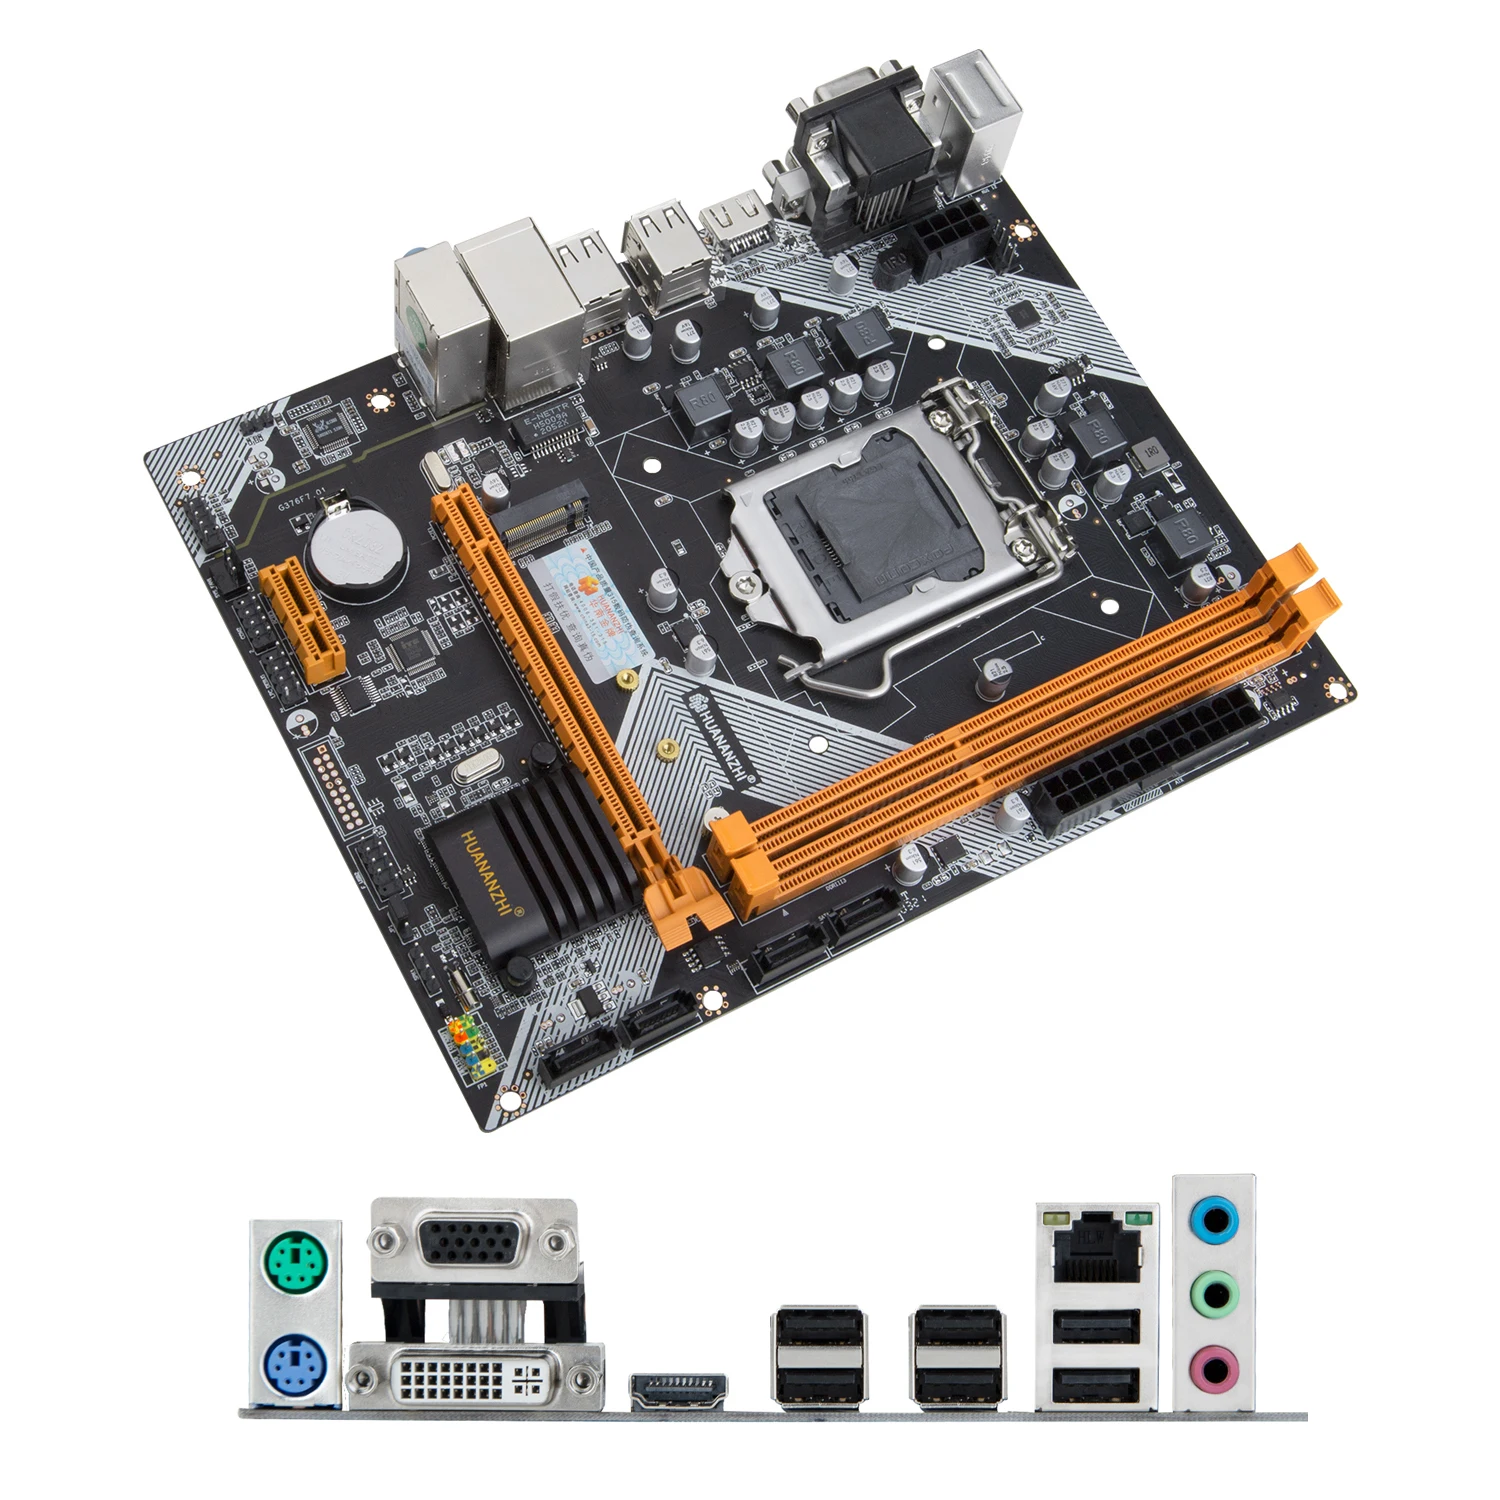 

HUANANZHI H61 Motherboard M-ATX For Intel LGA 1155 Support i3 i5 i7 DDR3 1333/1600MHz 16GB SATA M.2 USB2.0 VGA HDMI-Compatible